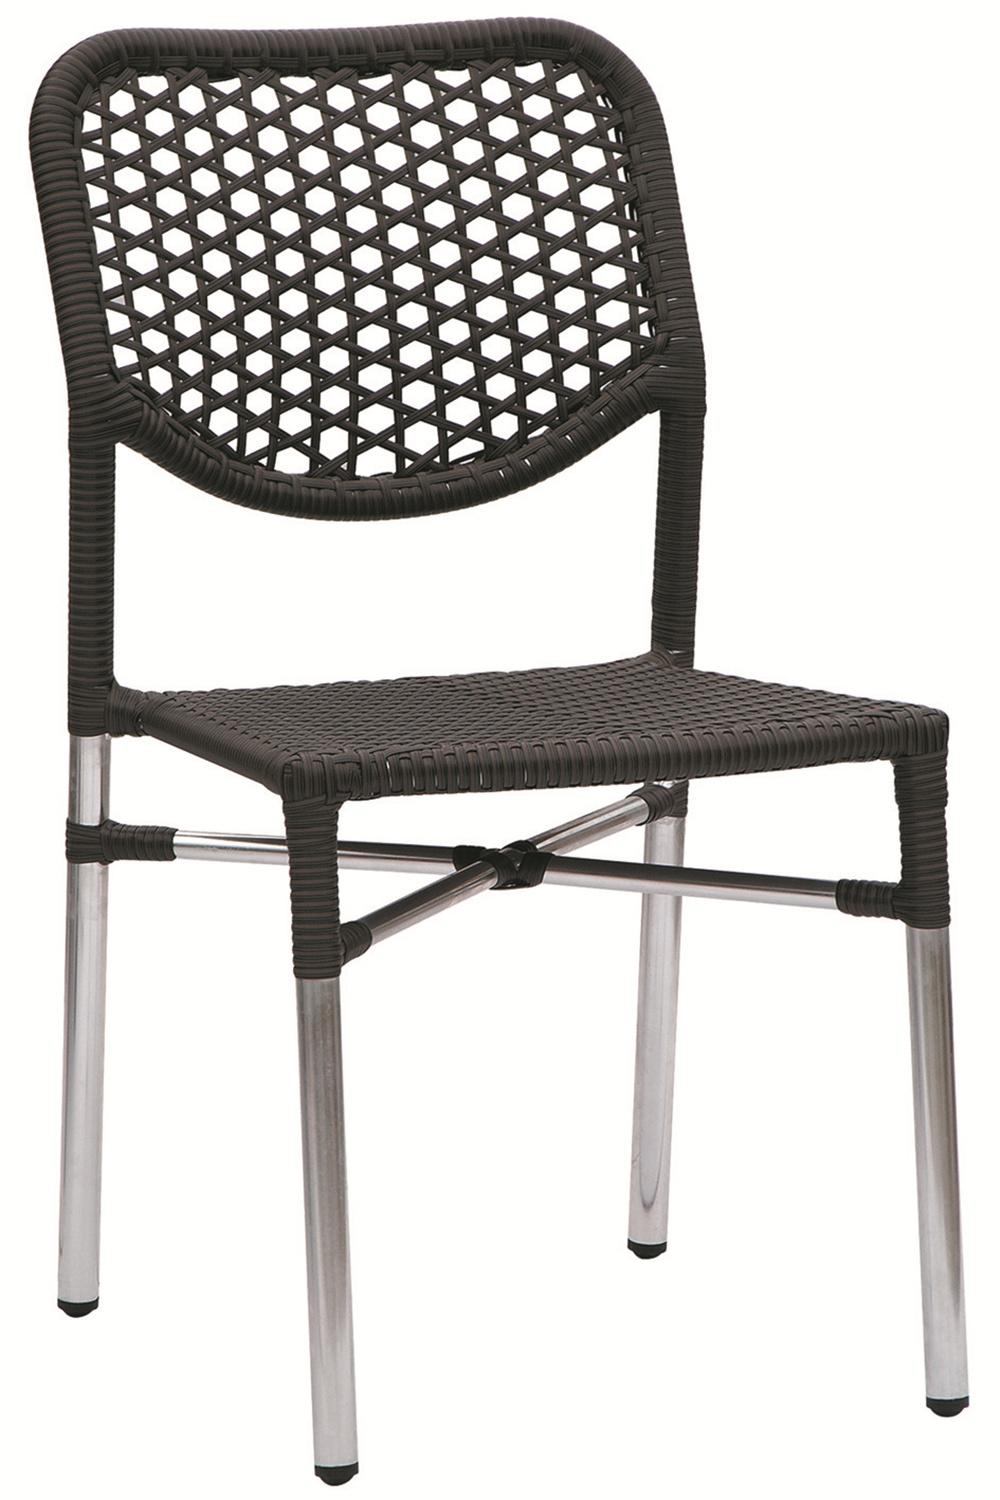 Outdoor Easy Design Simple Structure Garden Fabric Silla Playa Chair